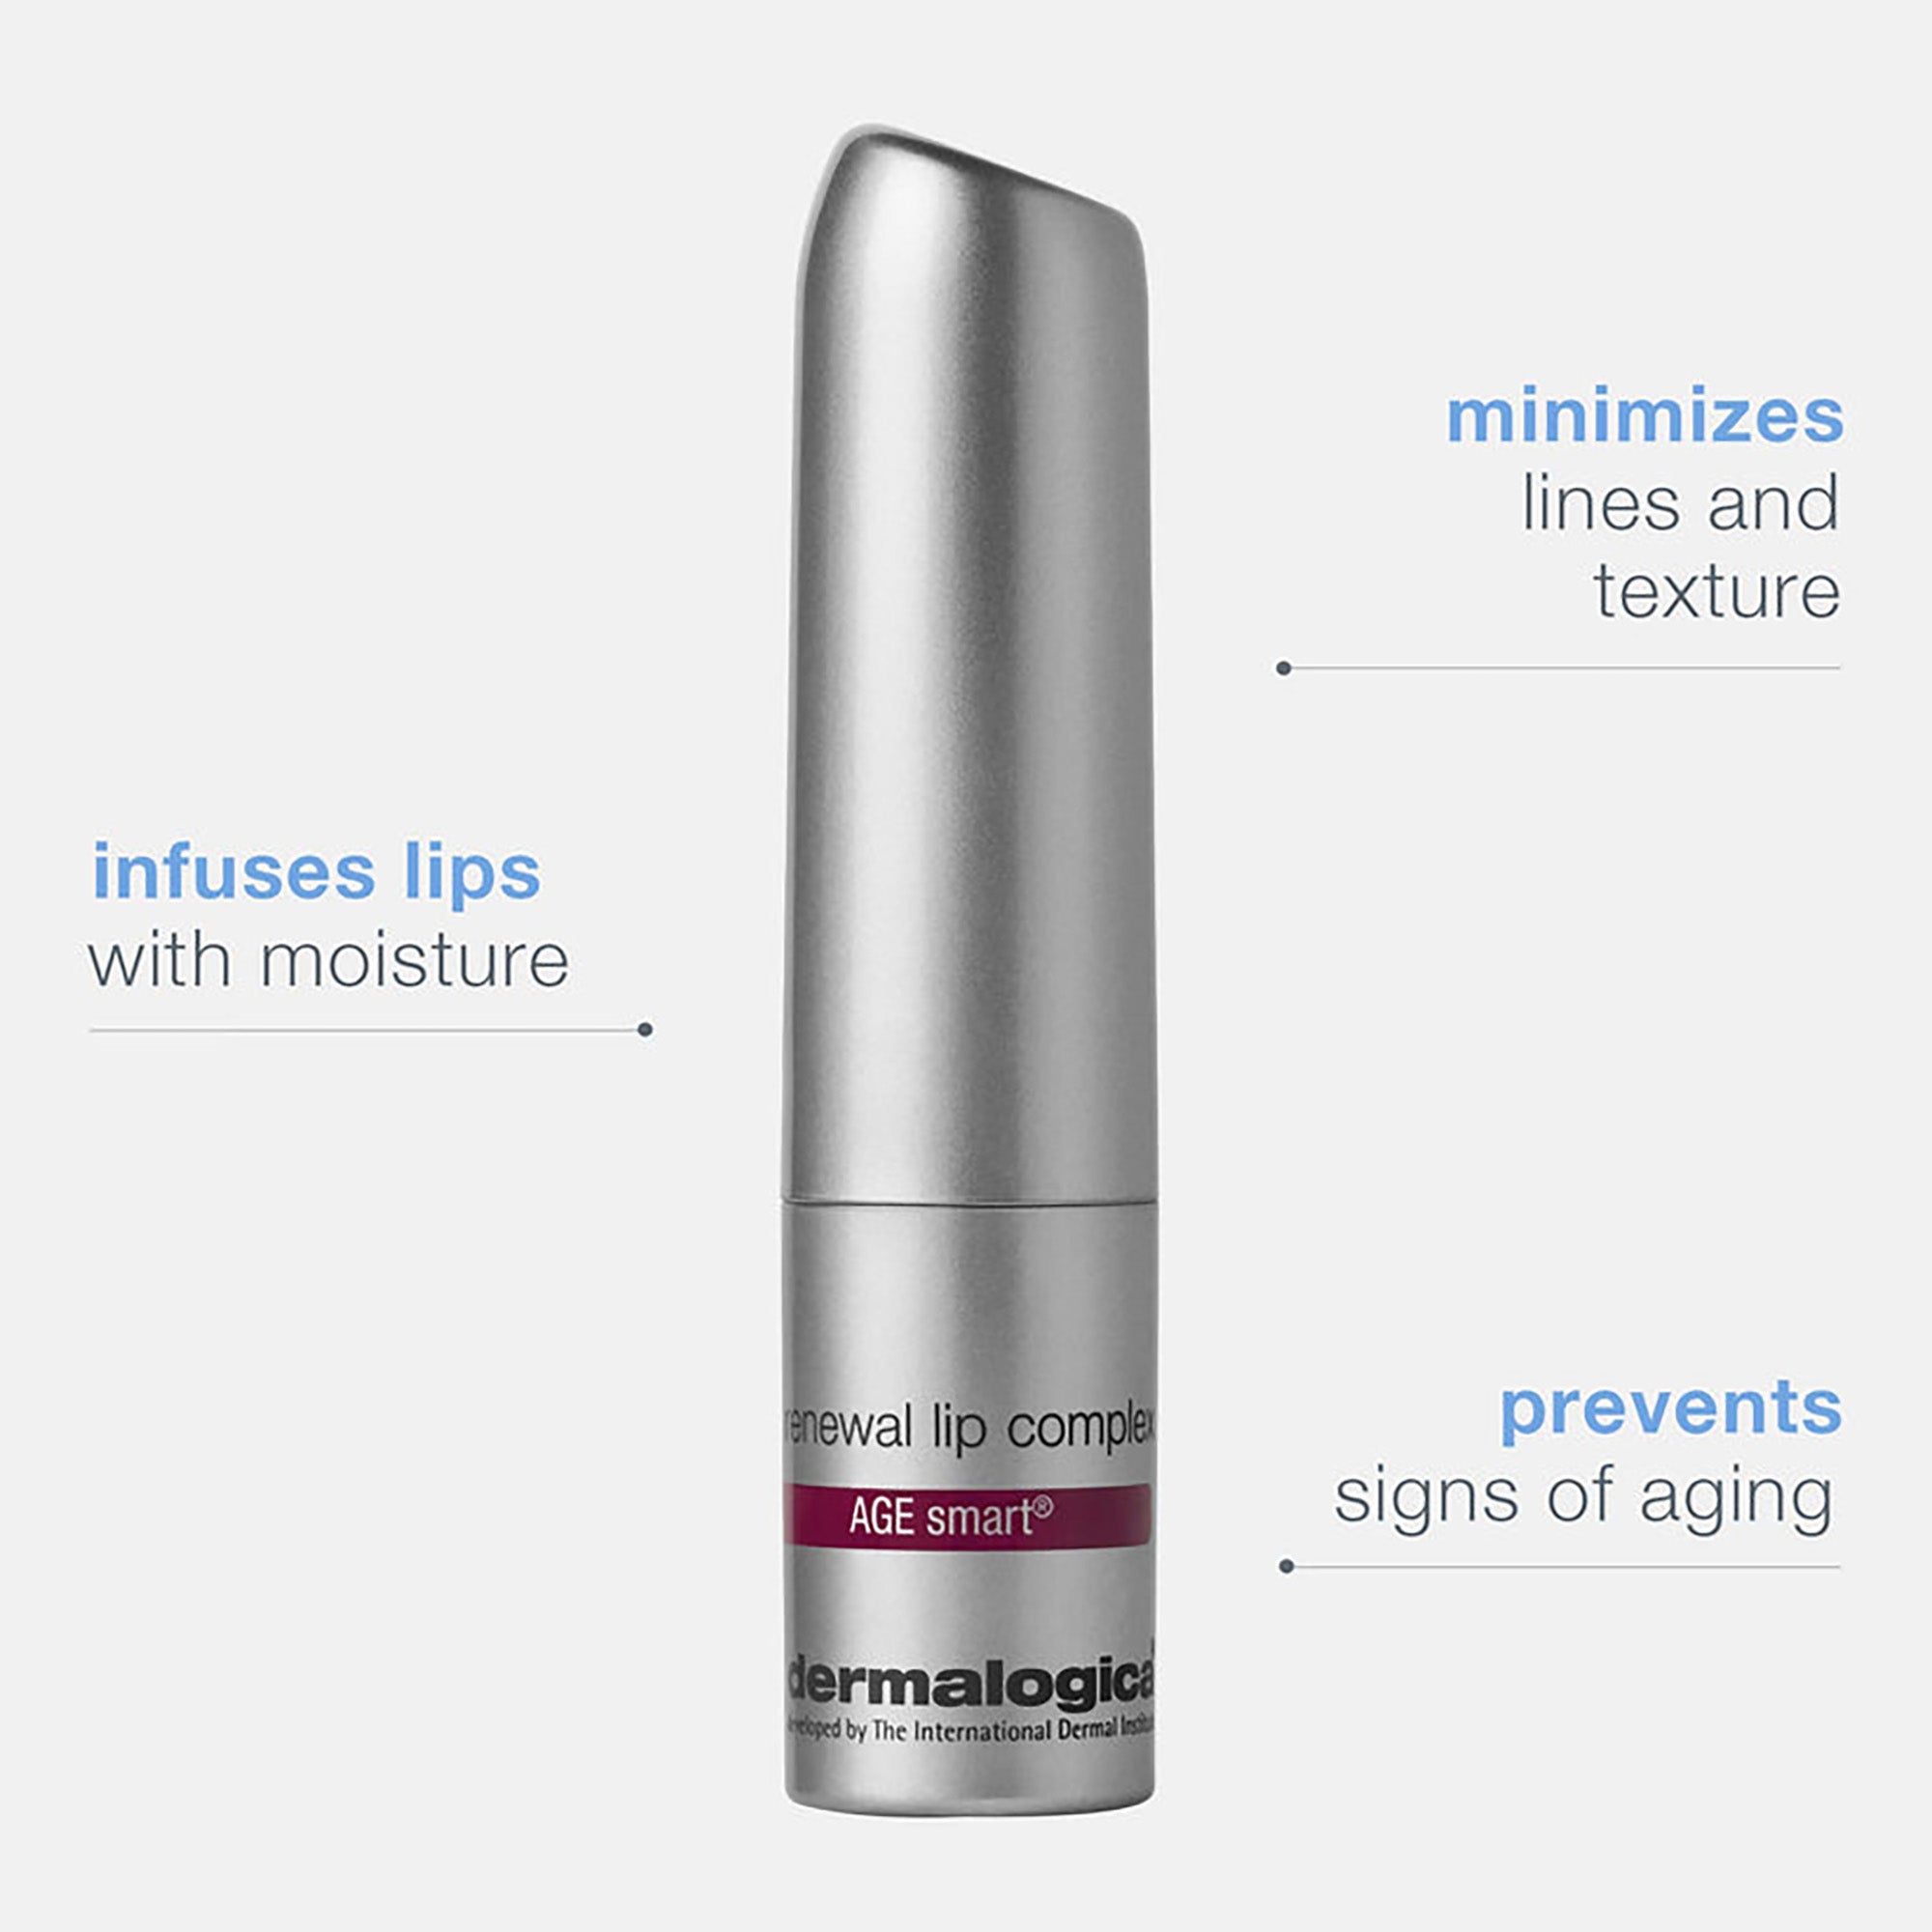 Dermalogica Age Smart Renewal Lip Complex / .06OZ